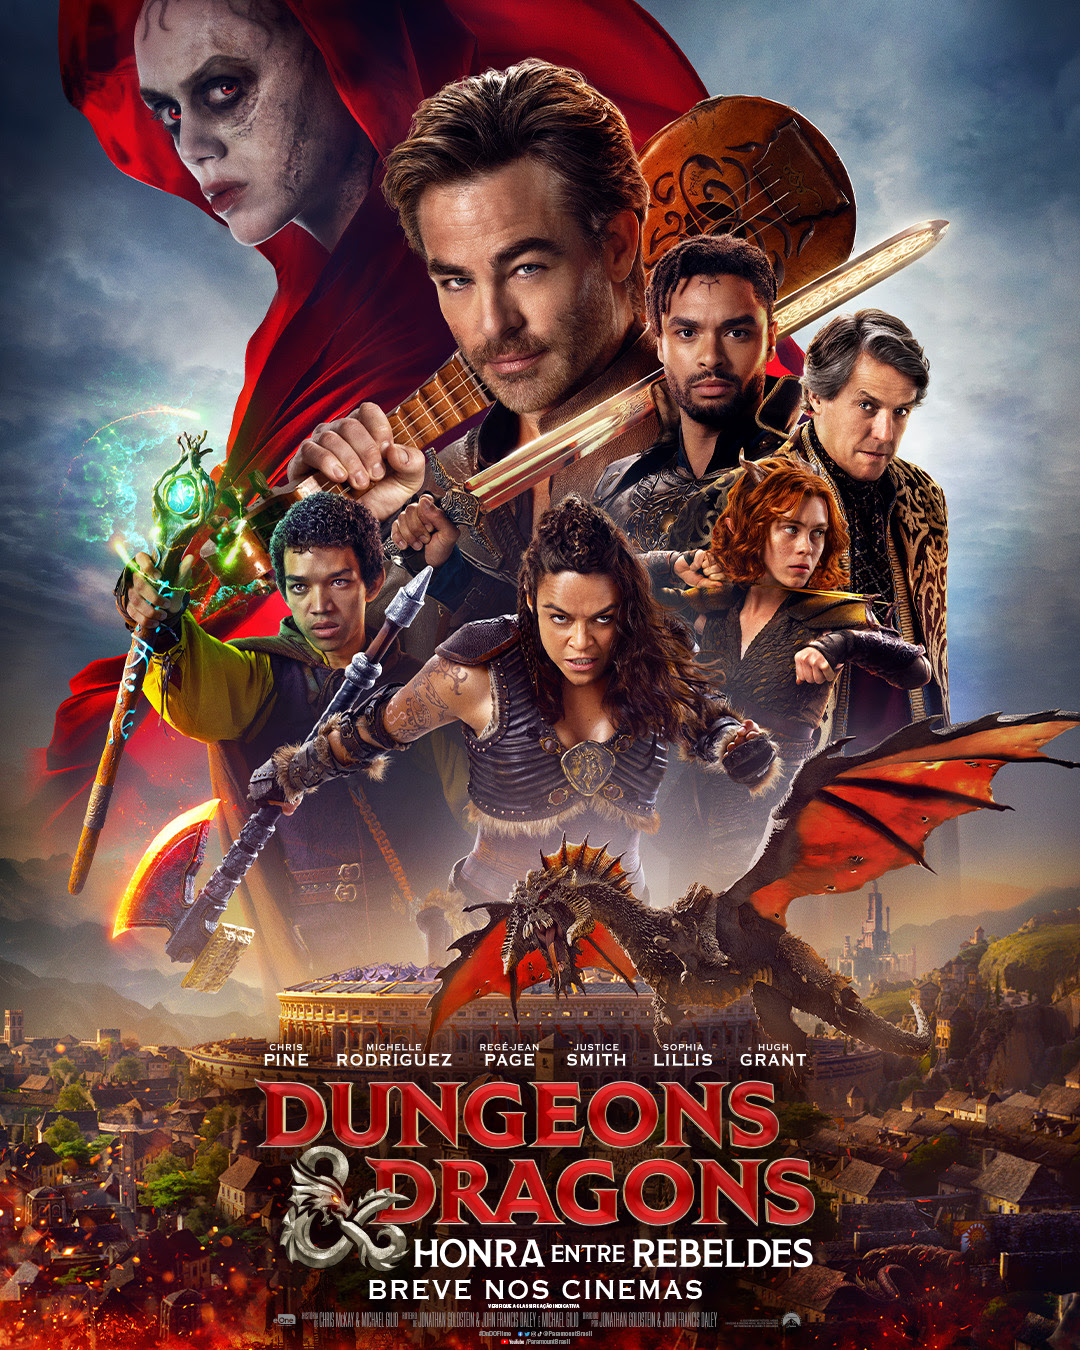 Dungeons & Dragons” ganha pôster e vídeo de bastidores na CCXP22